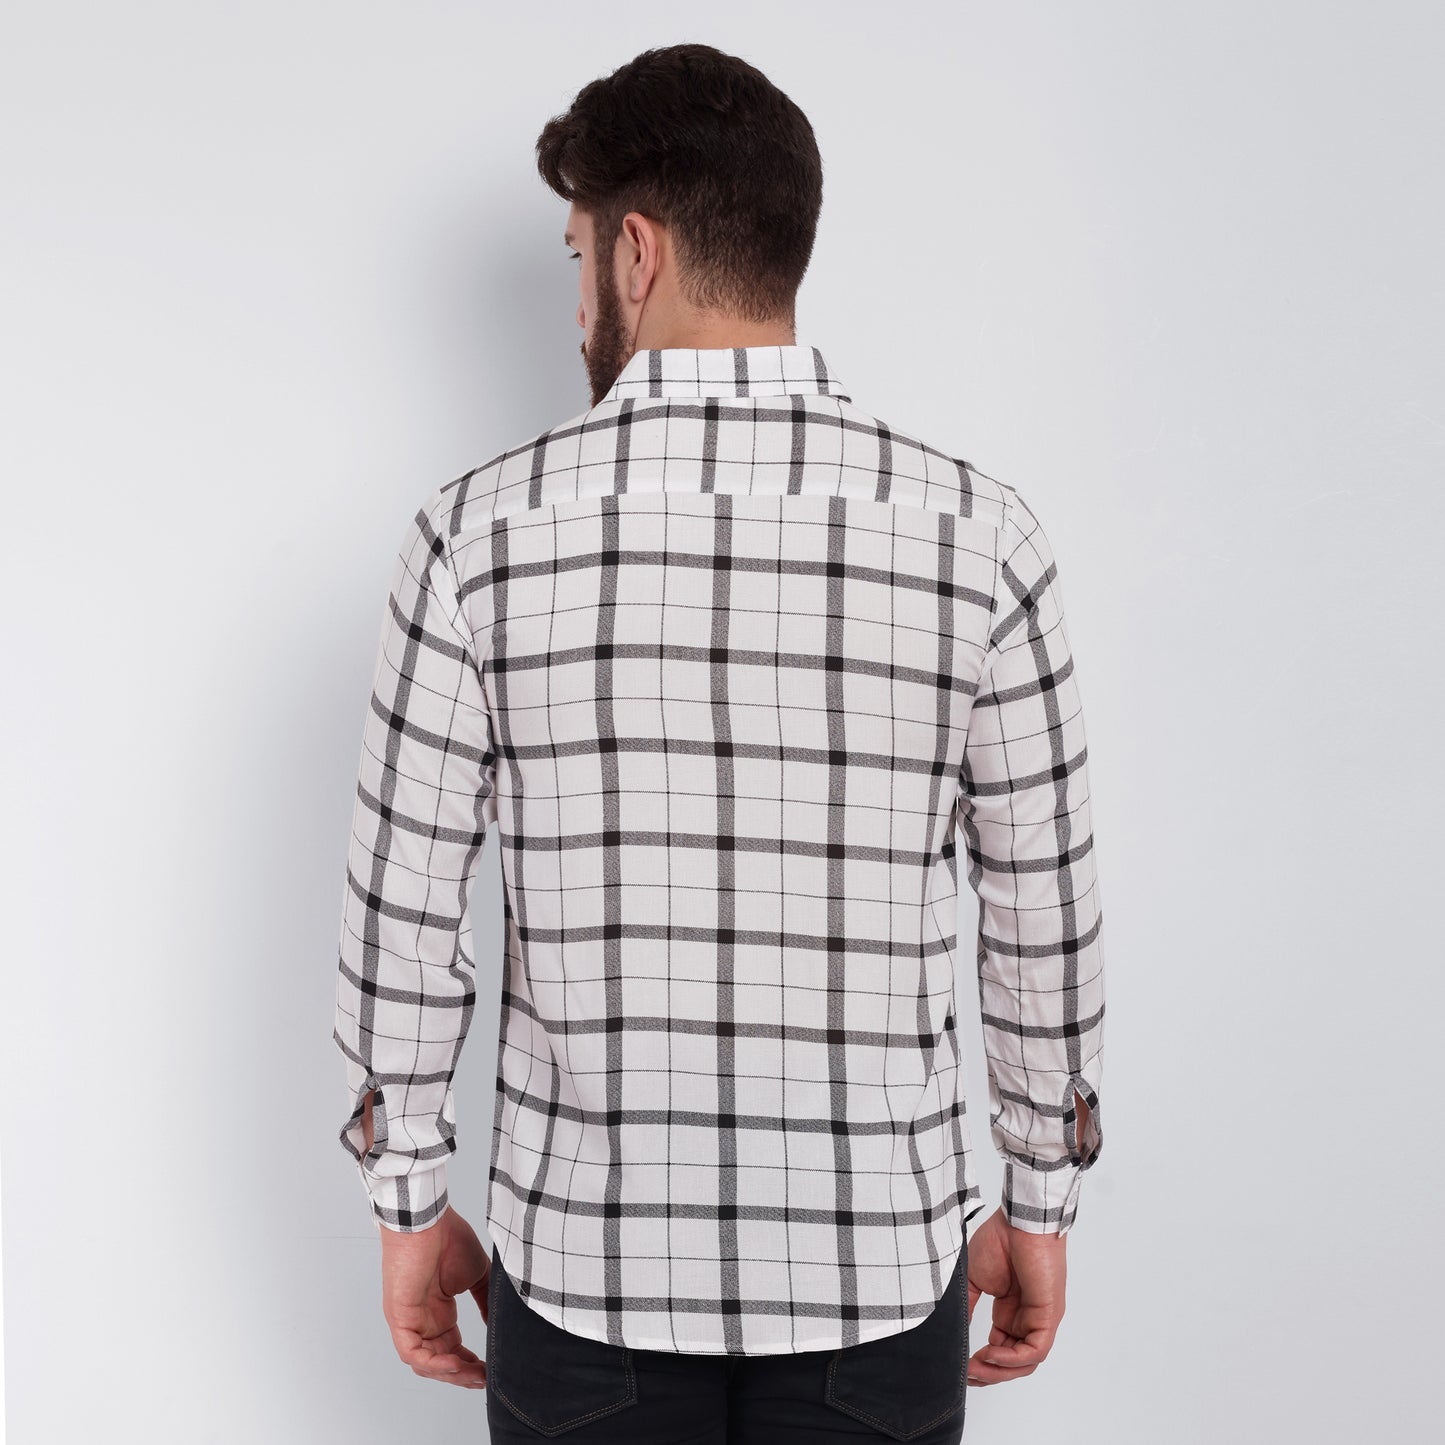 Vastraa Fusion Men's Rayon Checkered Shirt